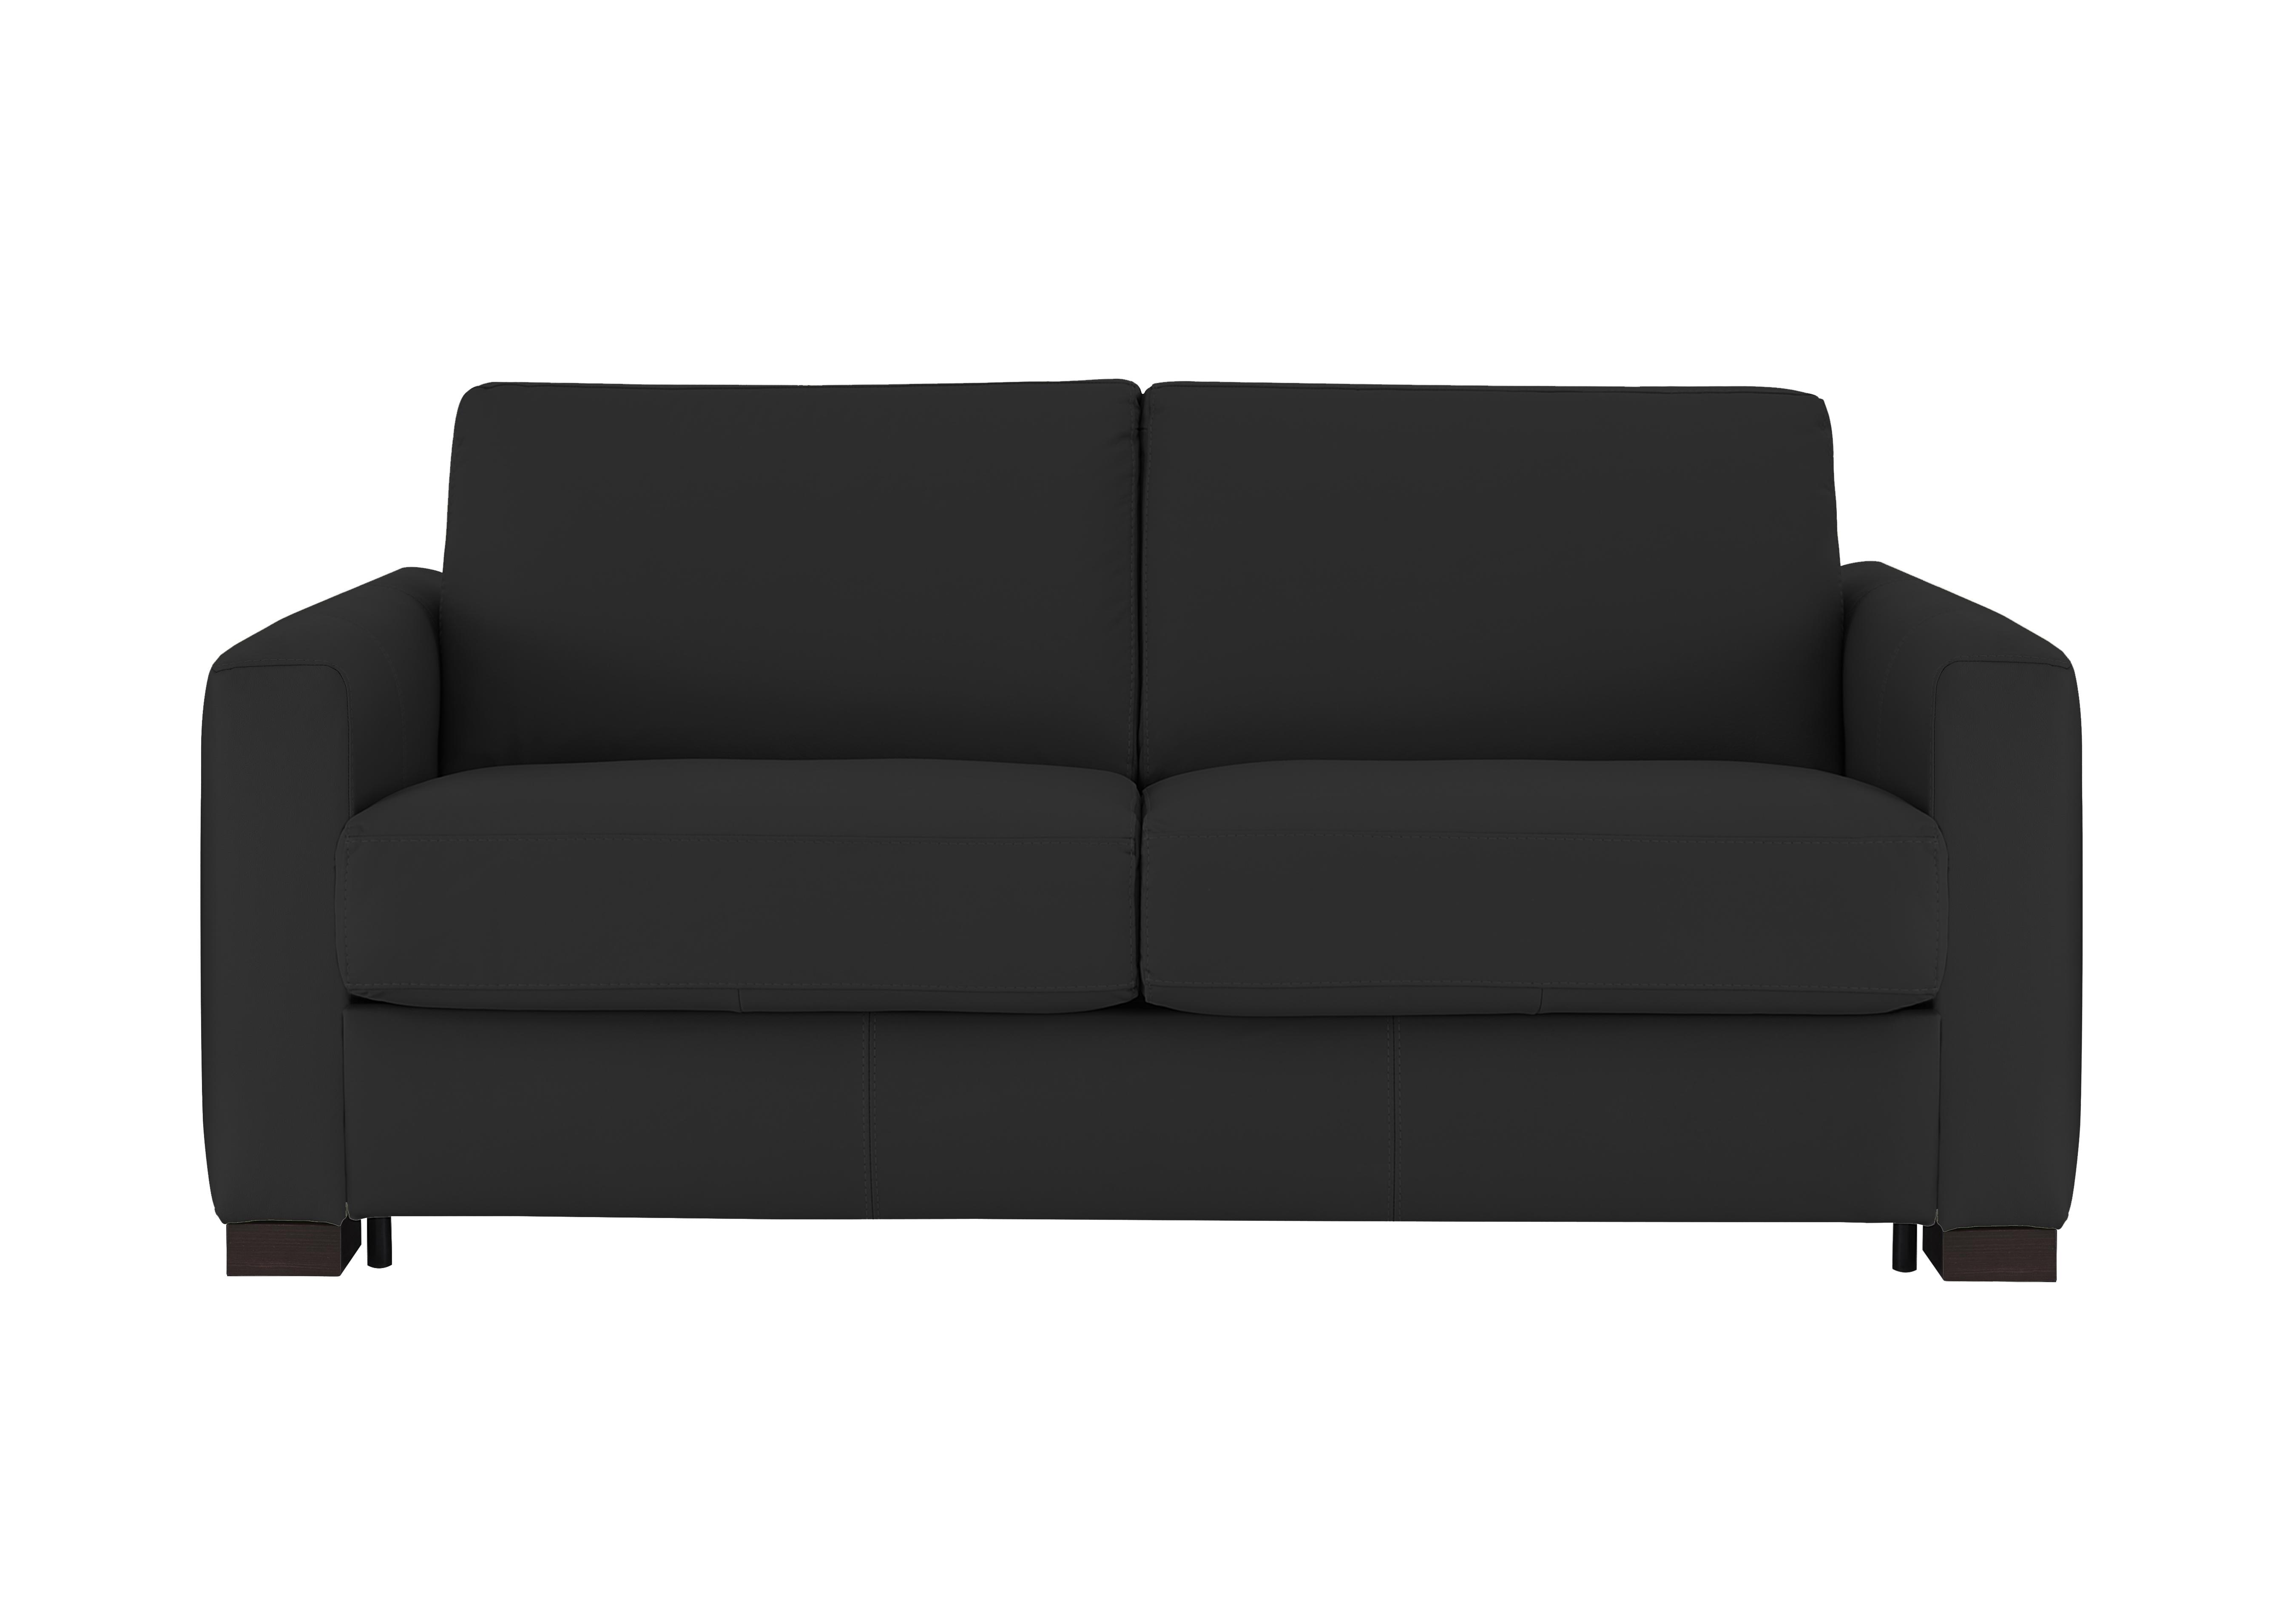 Alcova 2.5 Seater Leather Sofa Bed with Box Arms in Torello Nero 71 on Furniture Village